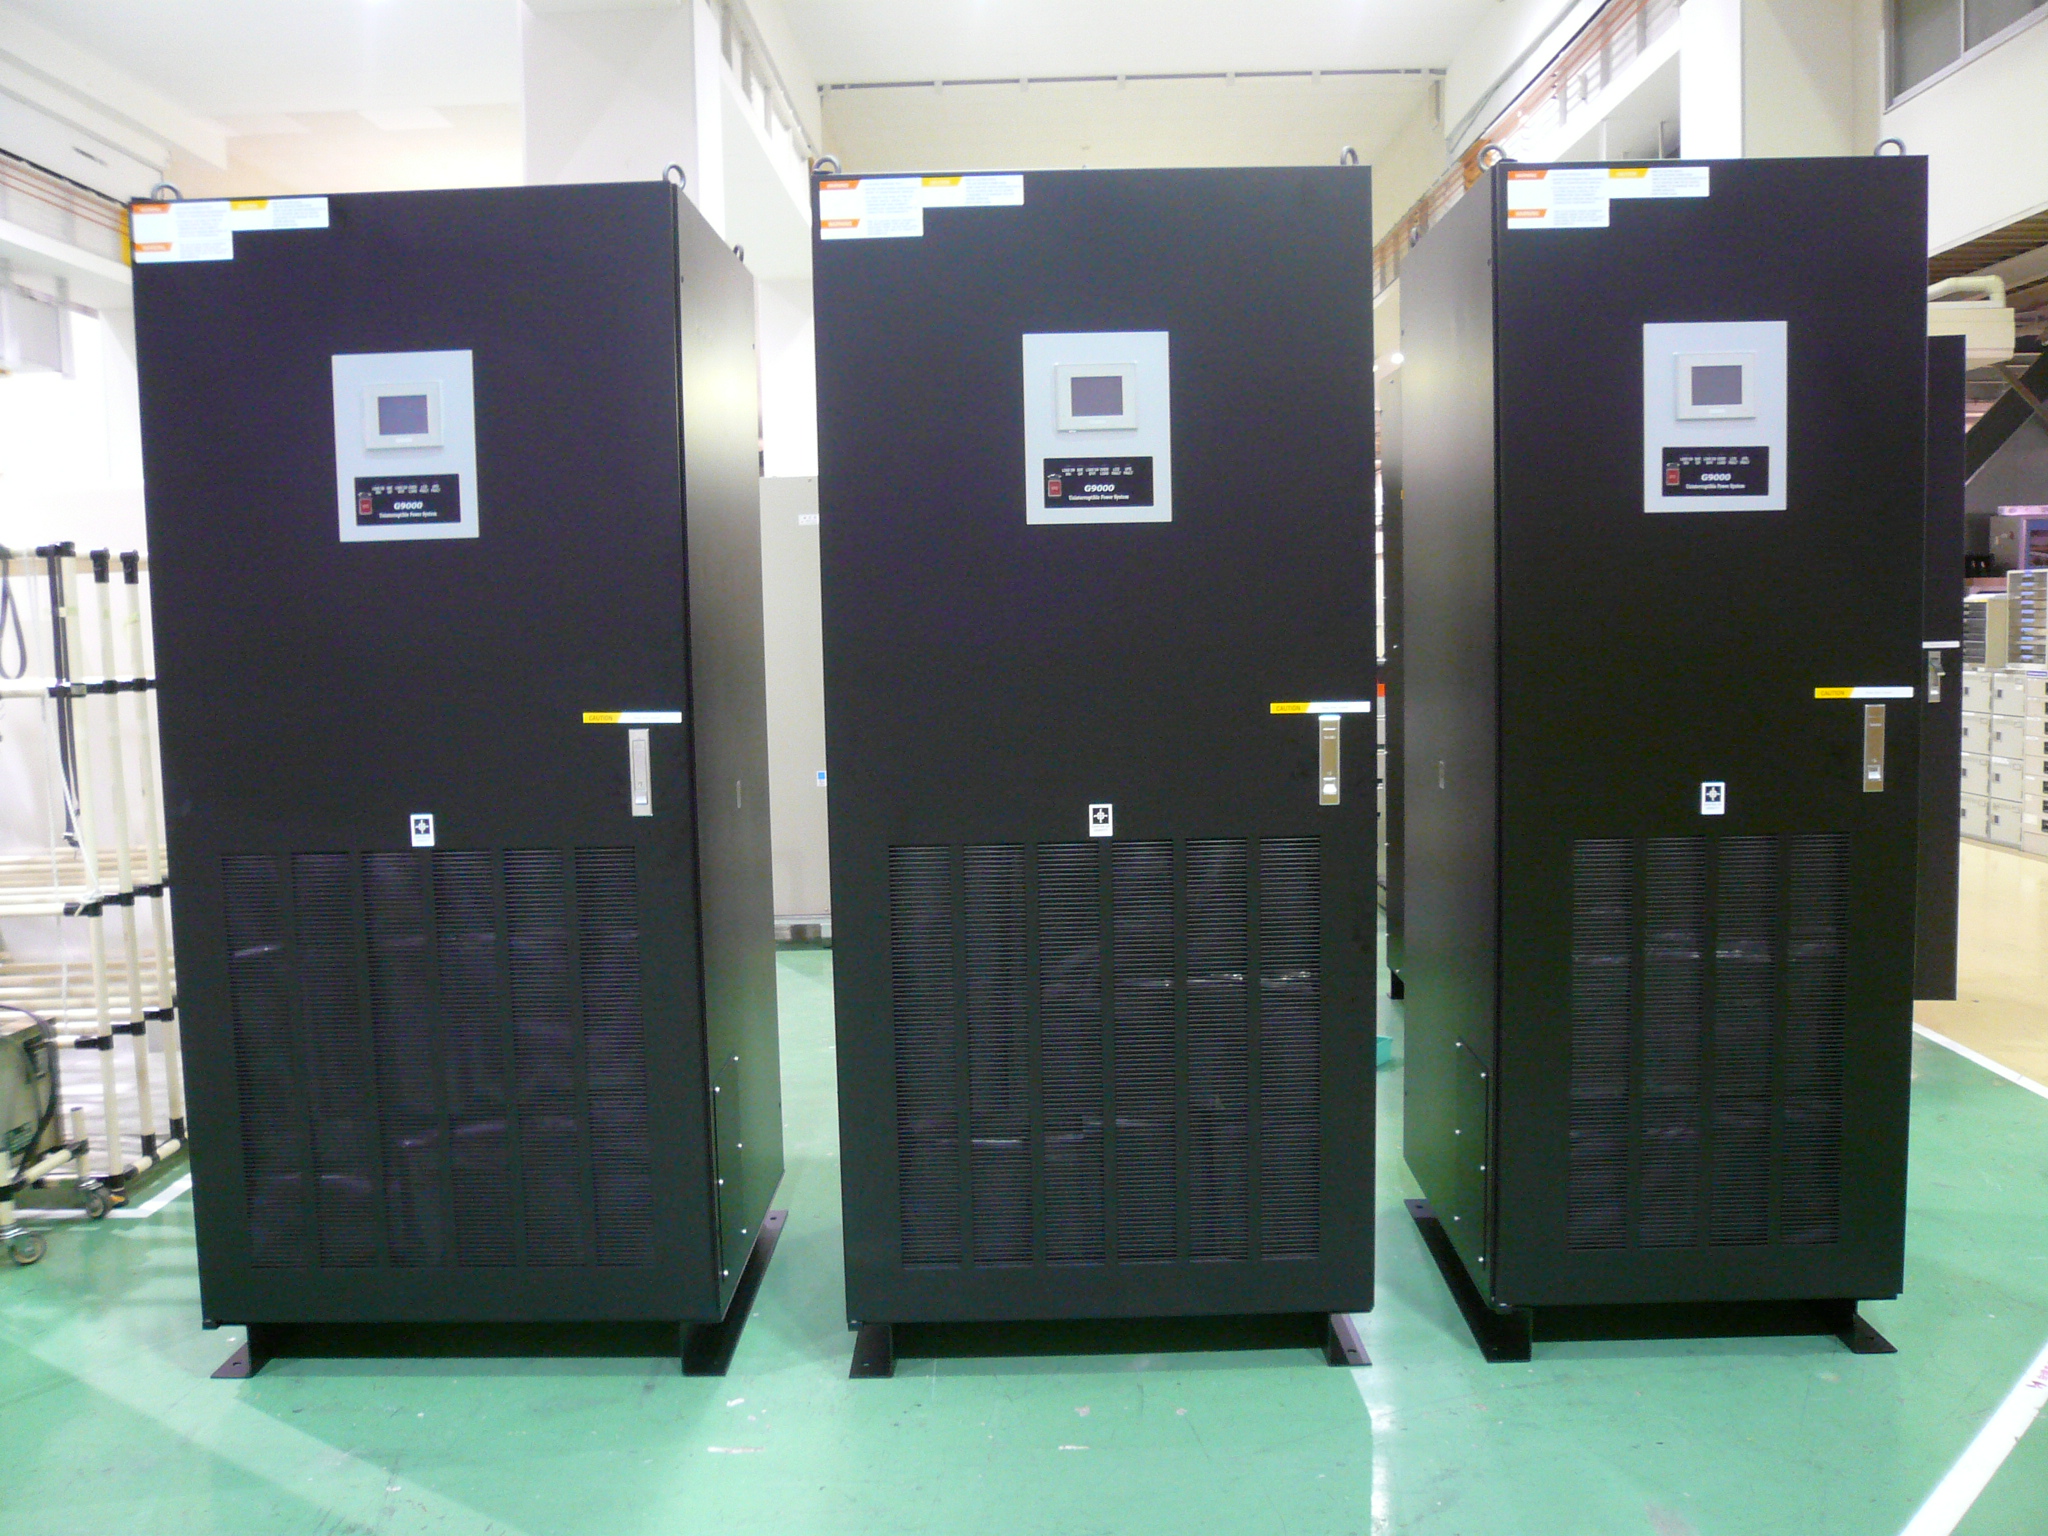 Toshiba Uninterruptible Power Supplies G9000 Series: 225kVA, 160kVA, 100kVA units